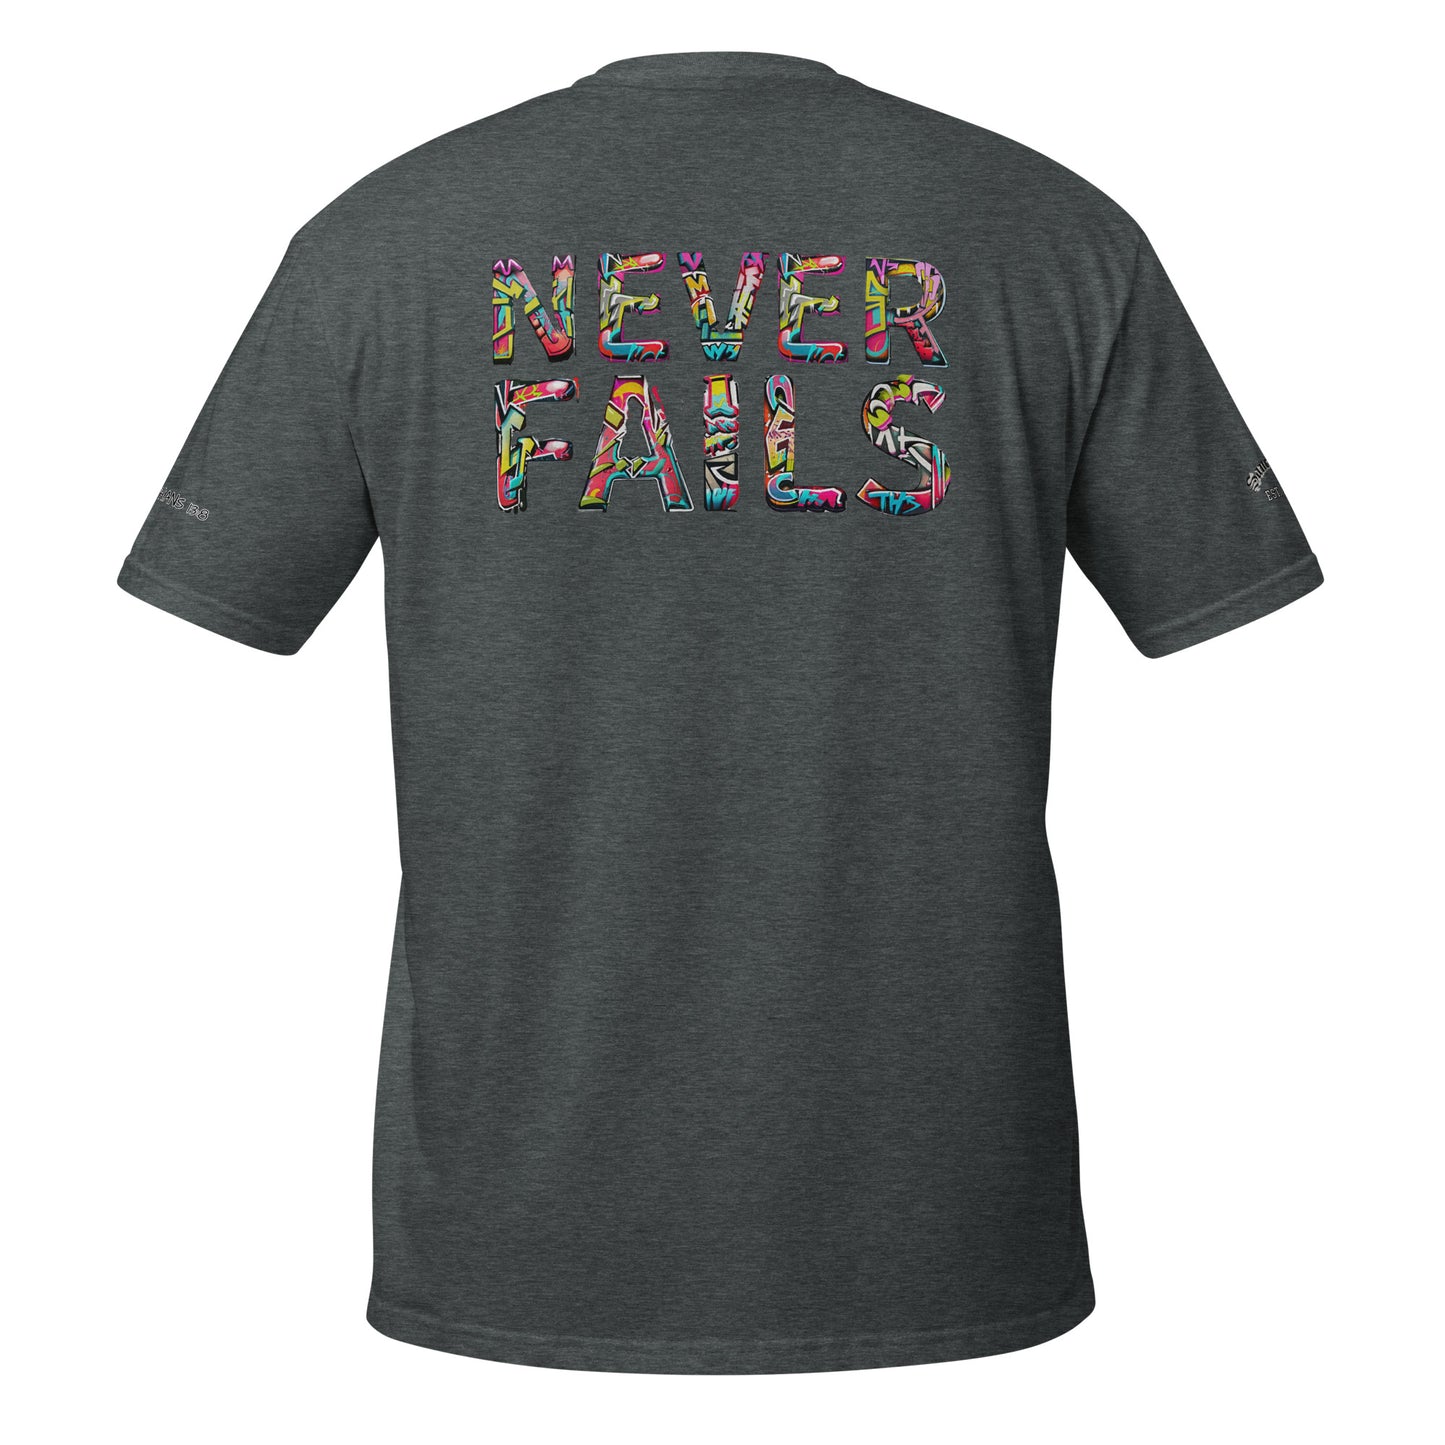 LOVE NEVER FAILS- Short-Sleeve Unisex T-Shirt